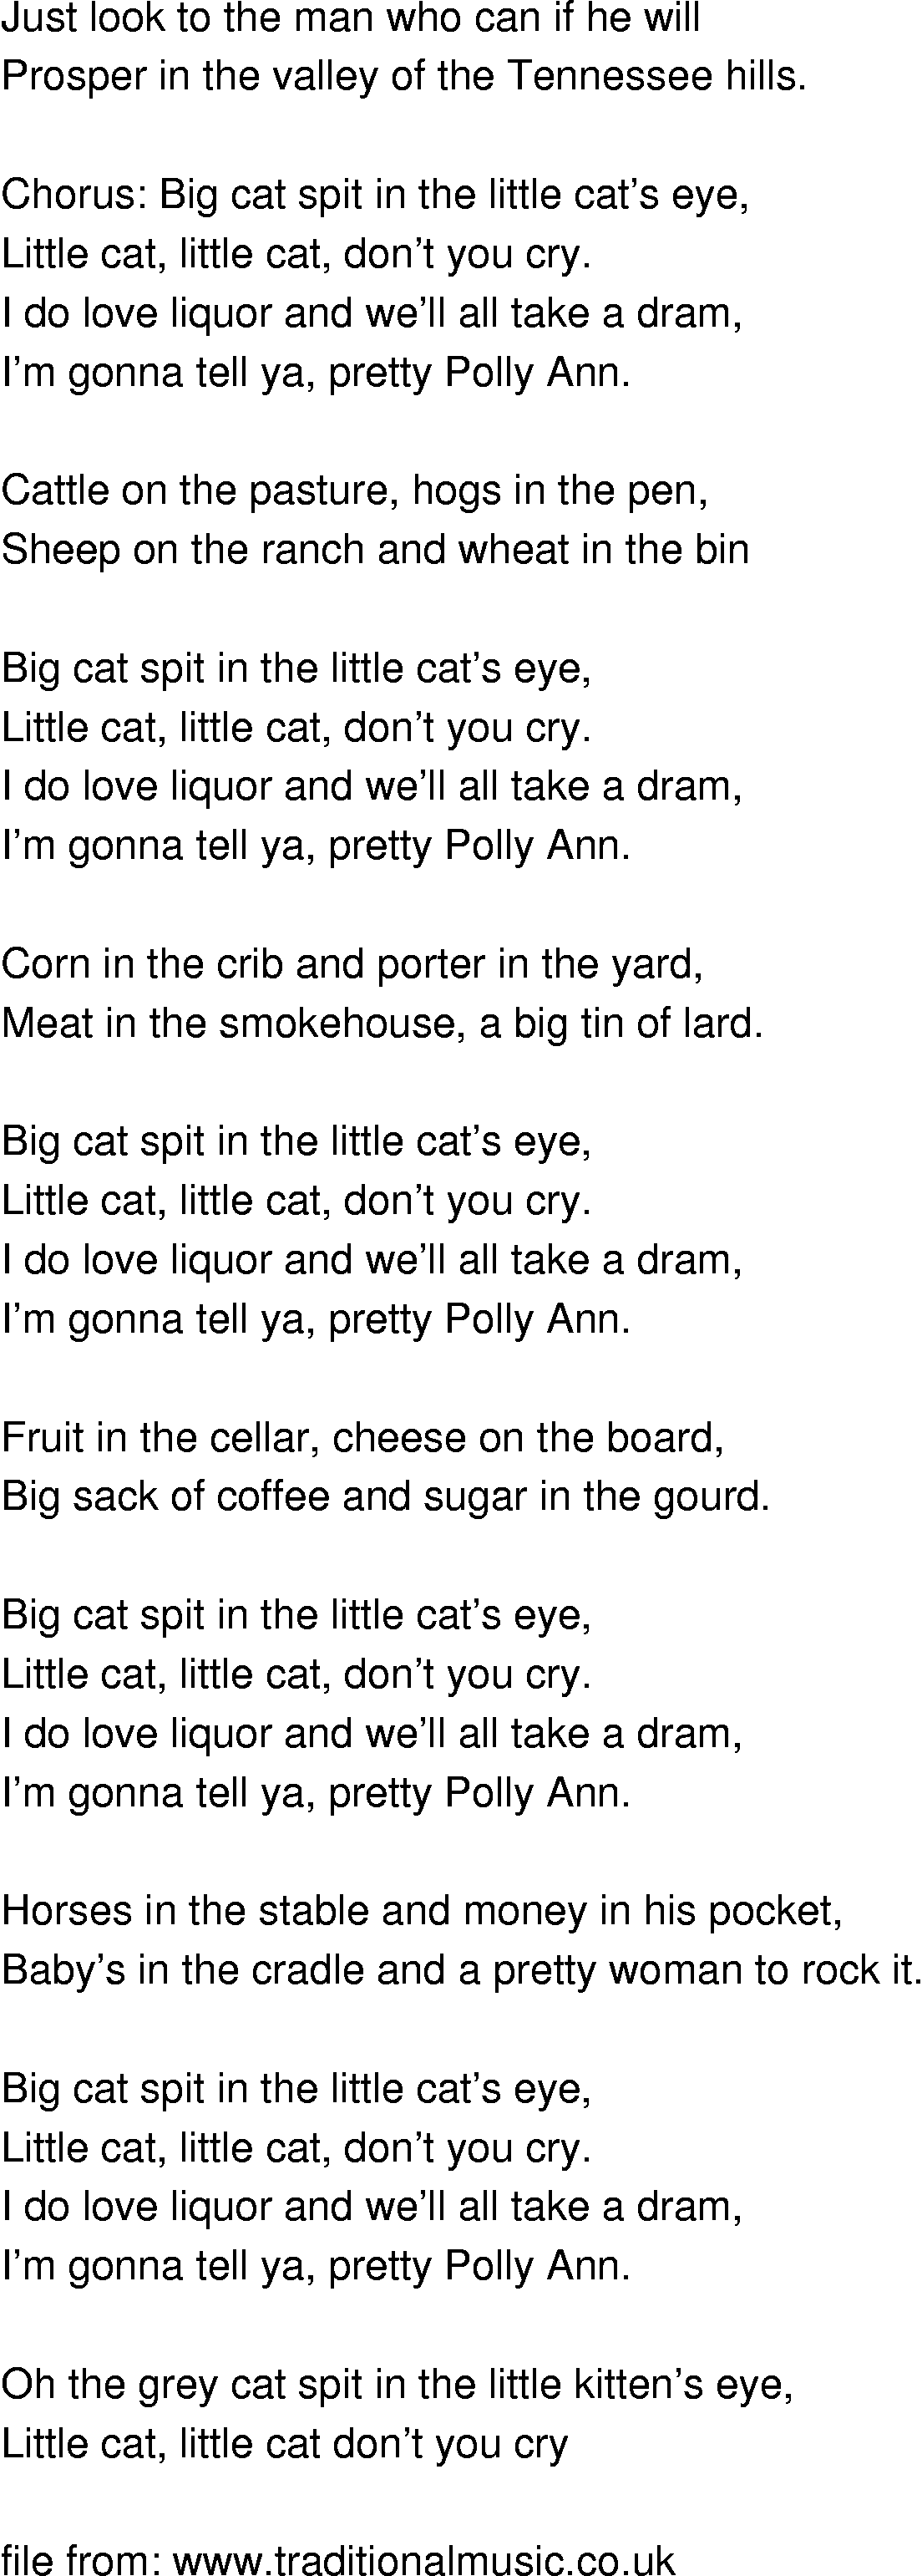 Old-Time (oldtimey) Song Lyrics - grey cat on a tennessee farm 